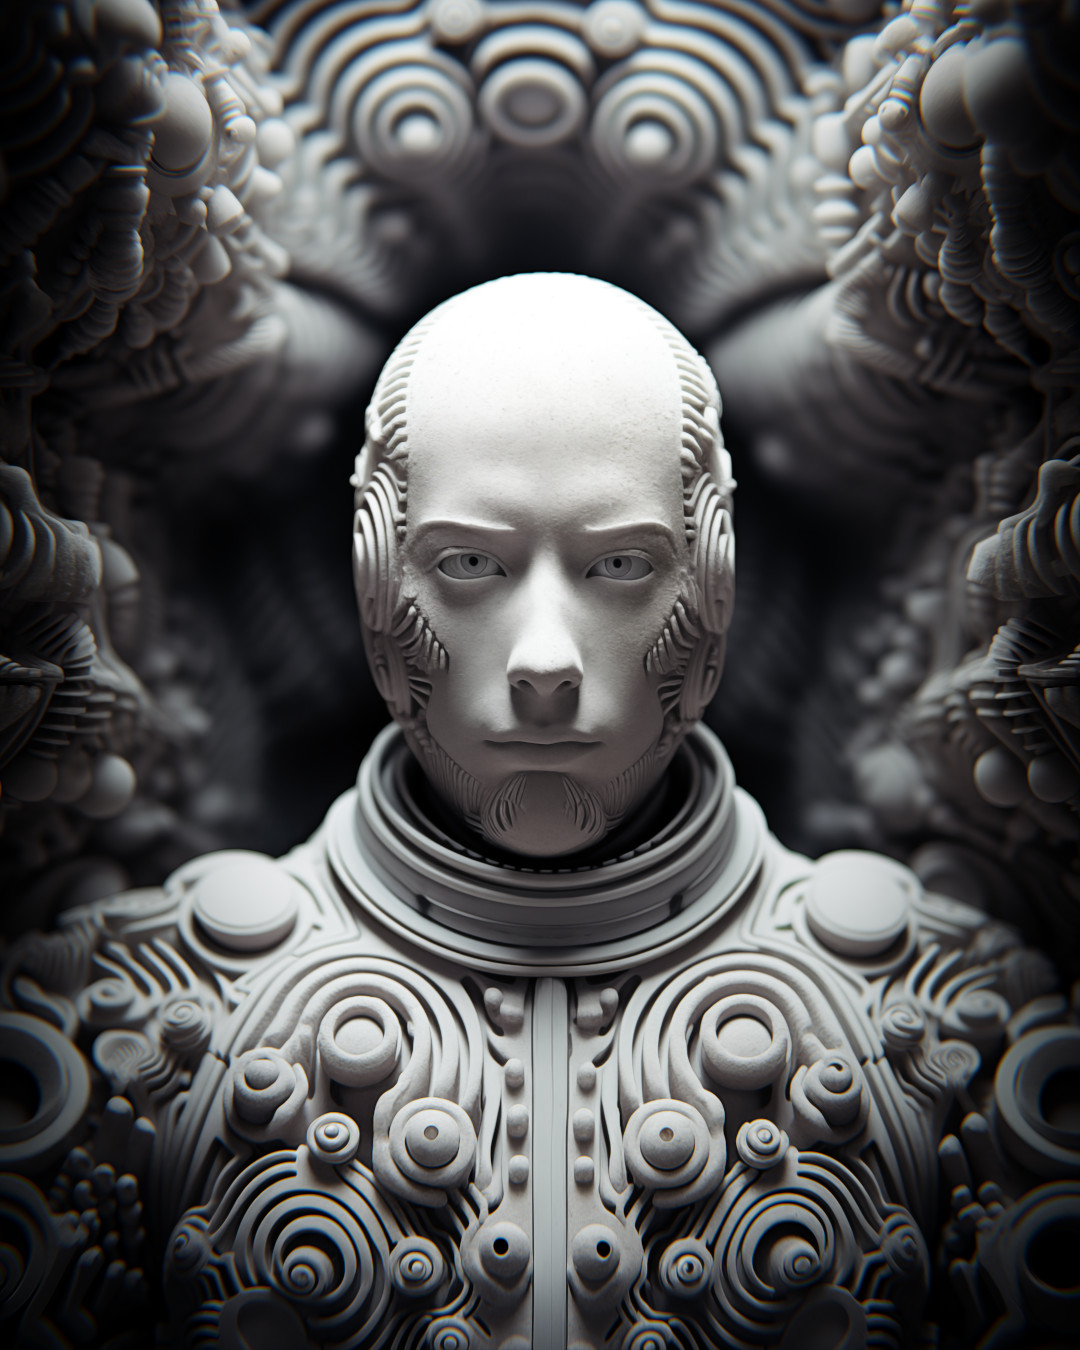 Futuristic astronaut, cybernetic sci-fi, geometric details, dark white and silver